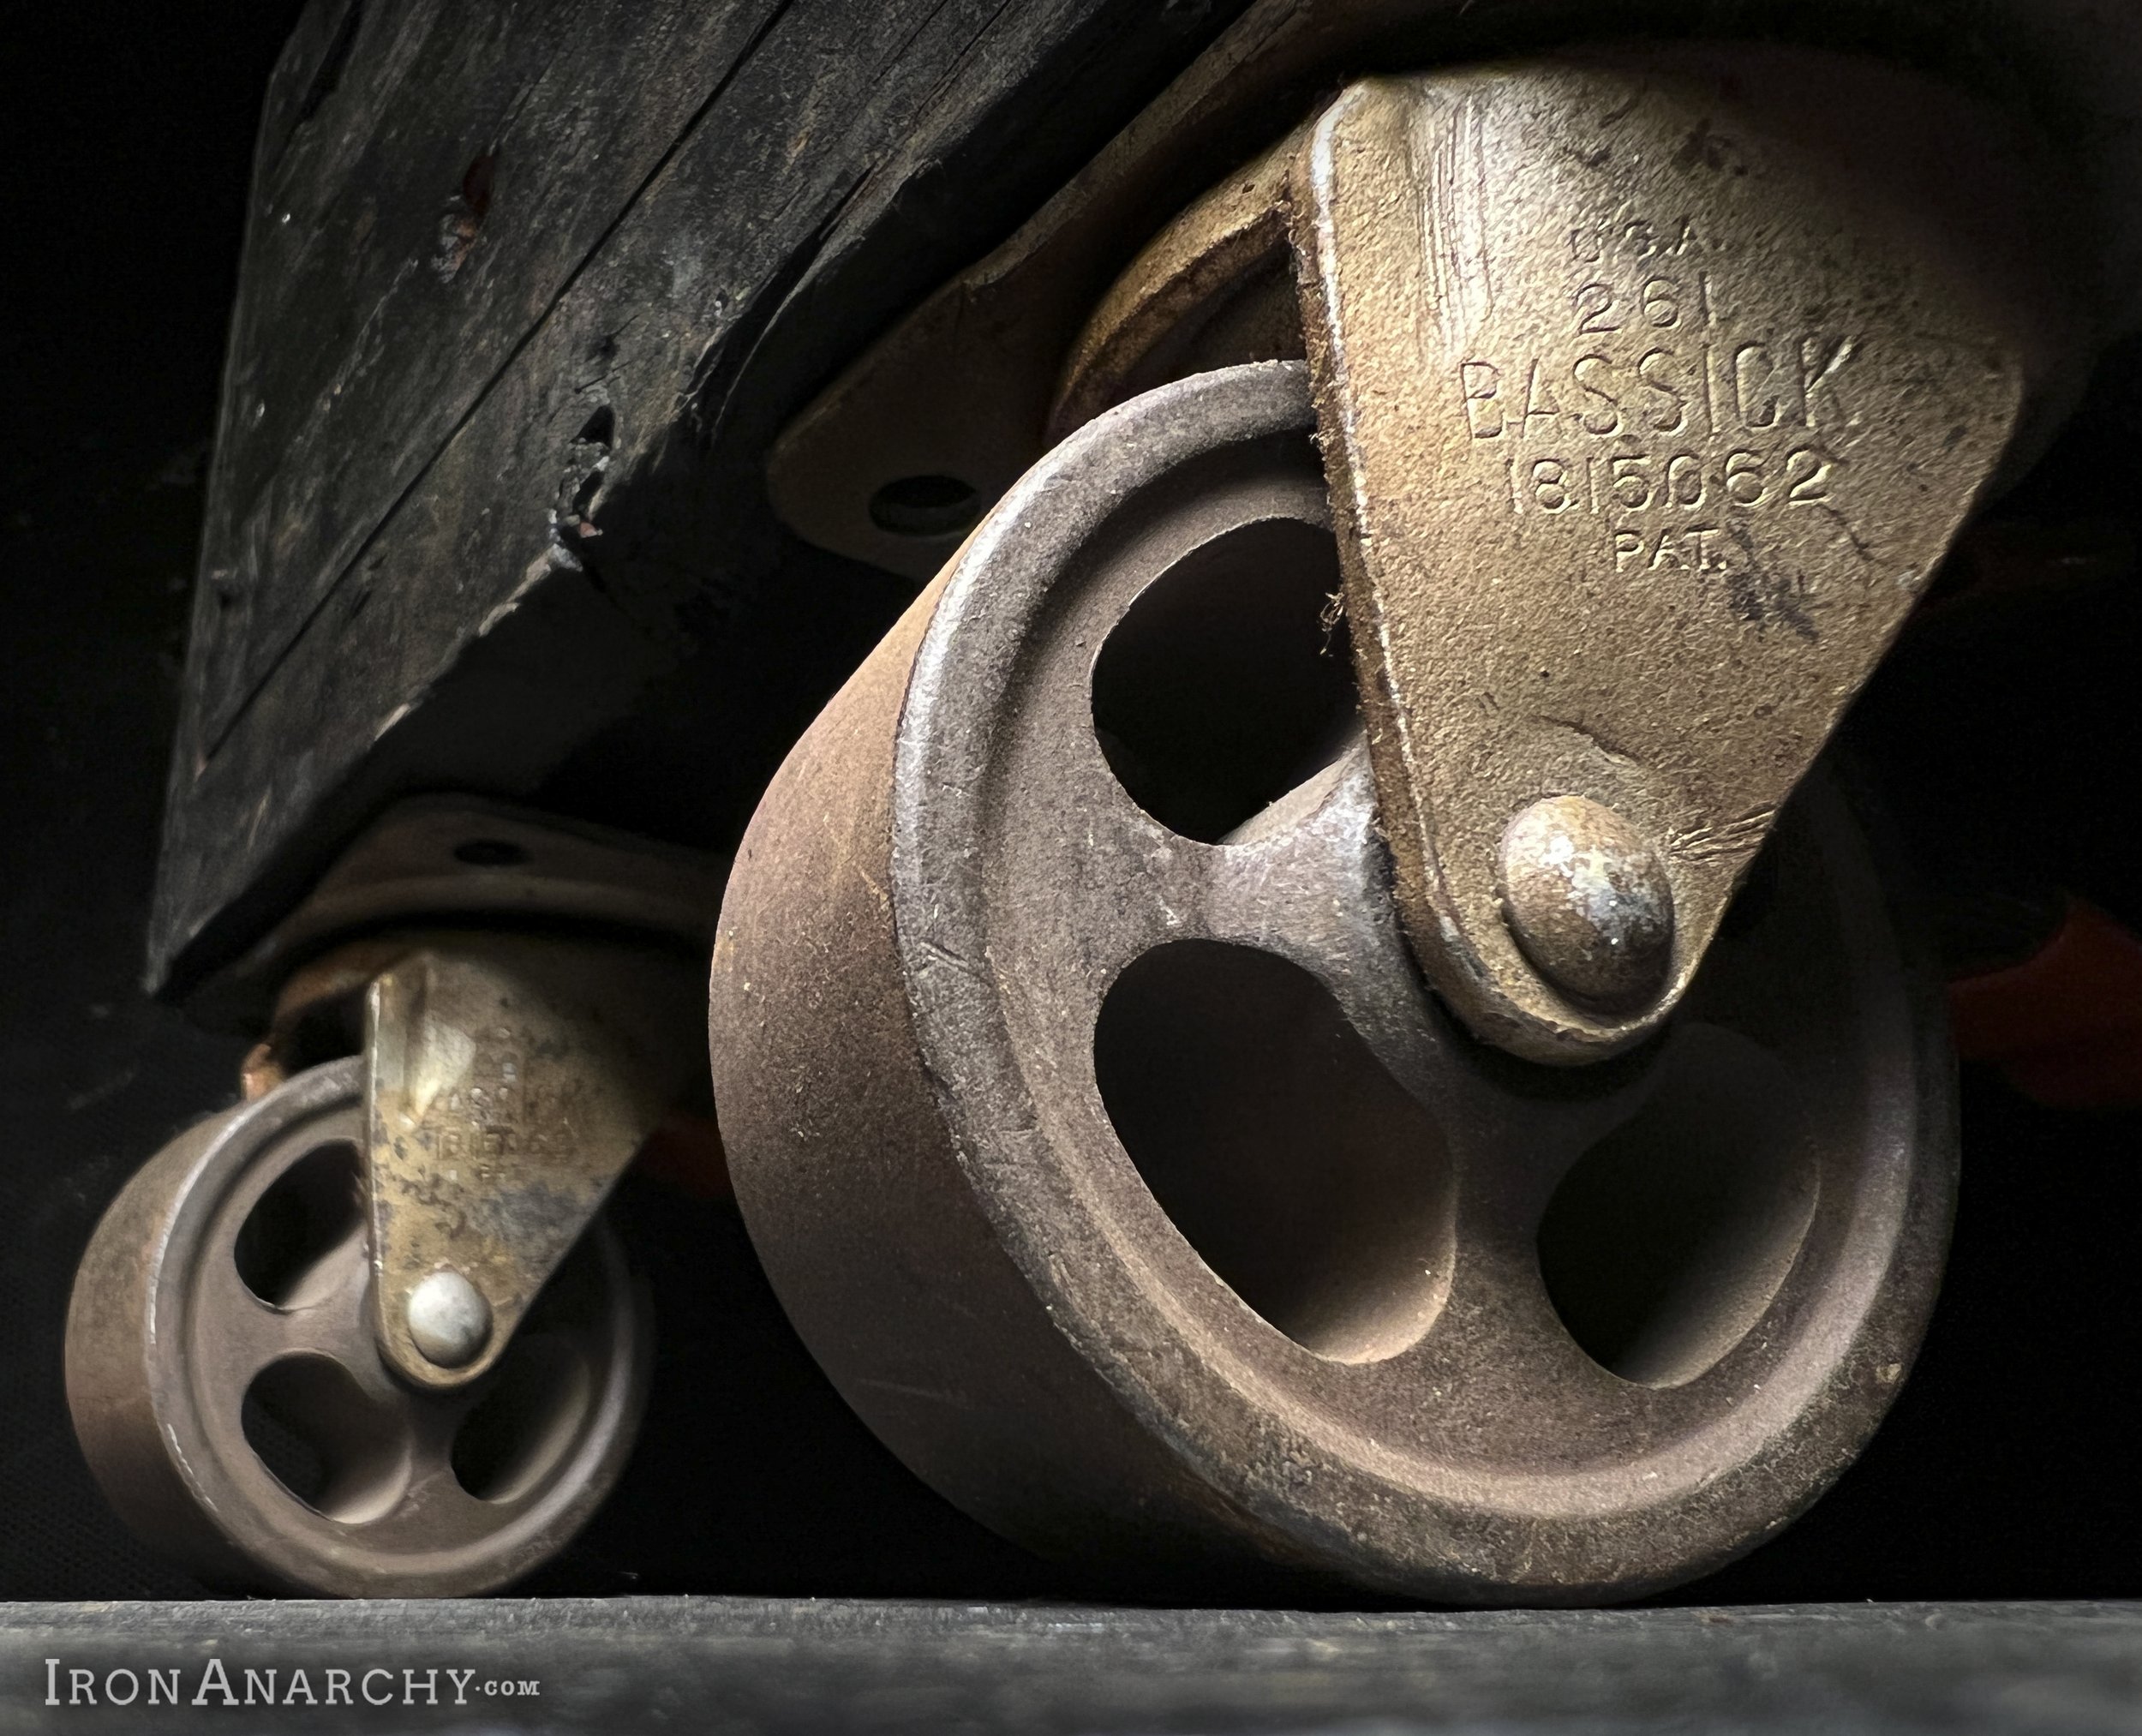 Antique Industrial Casters, Vintage Industrial Caster Wheels